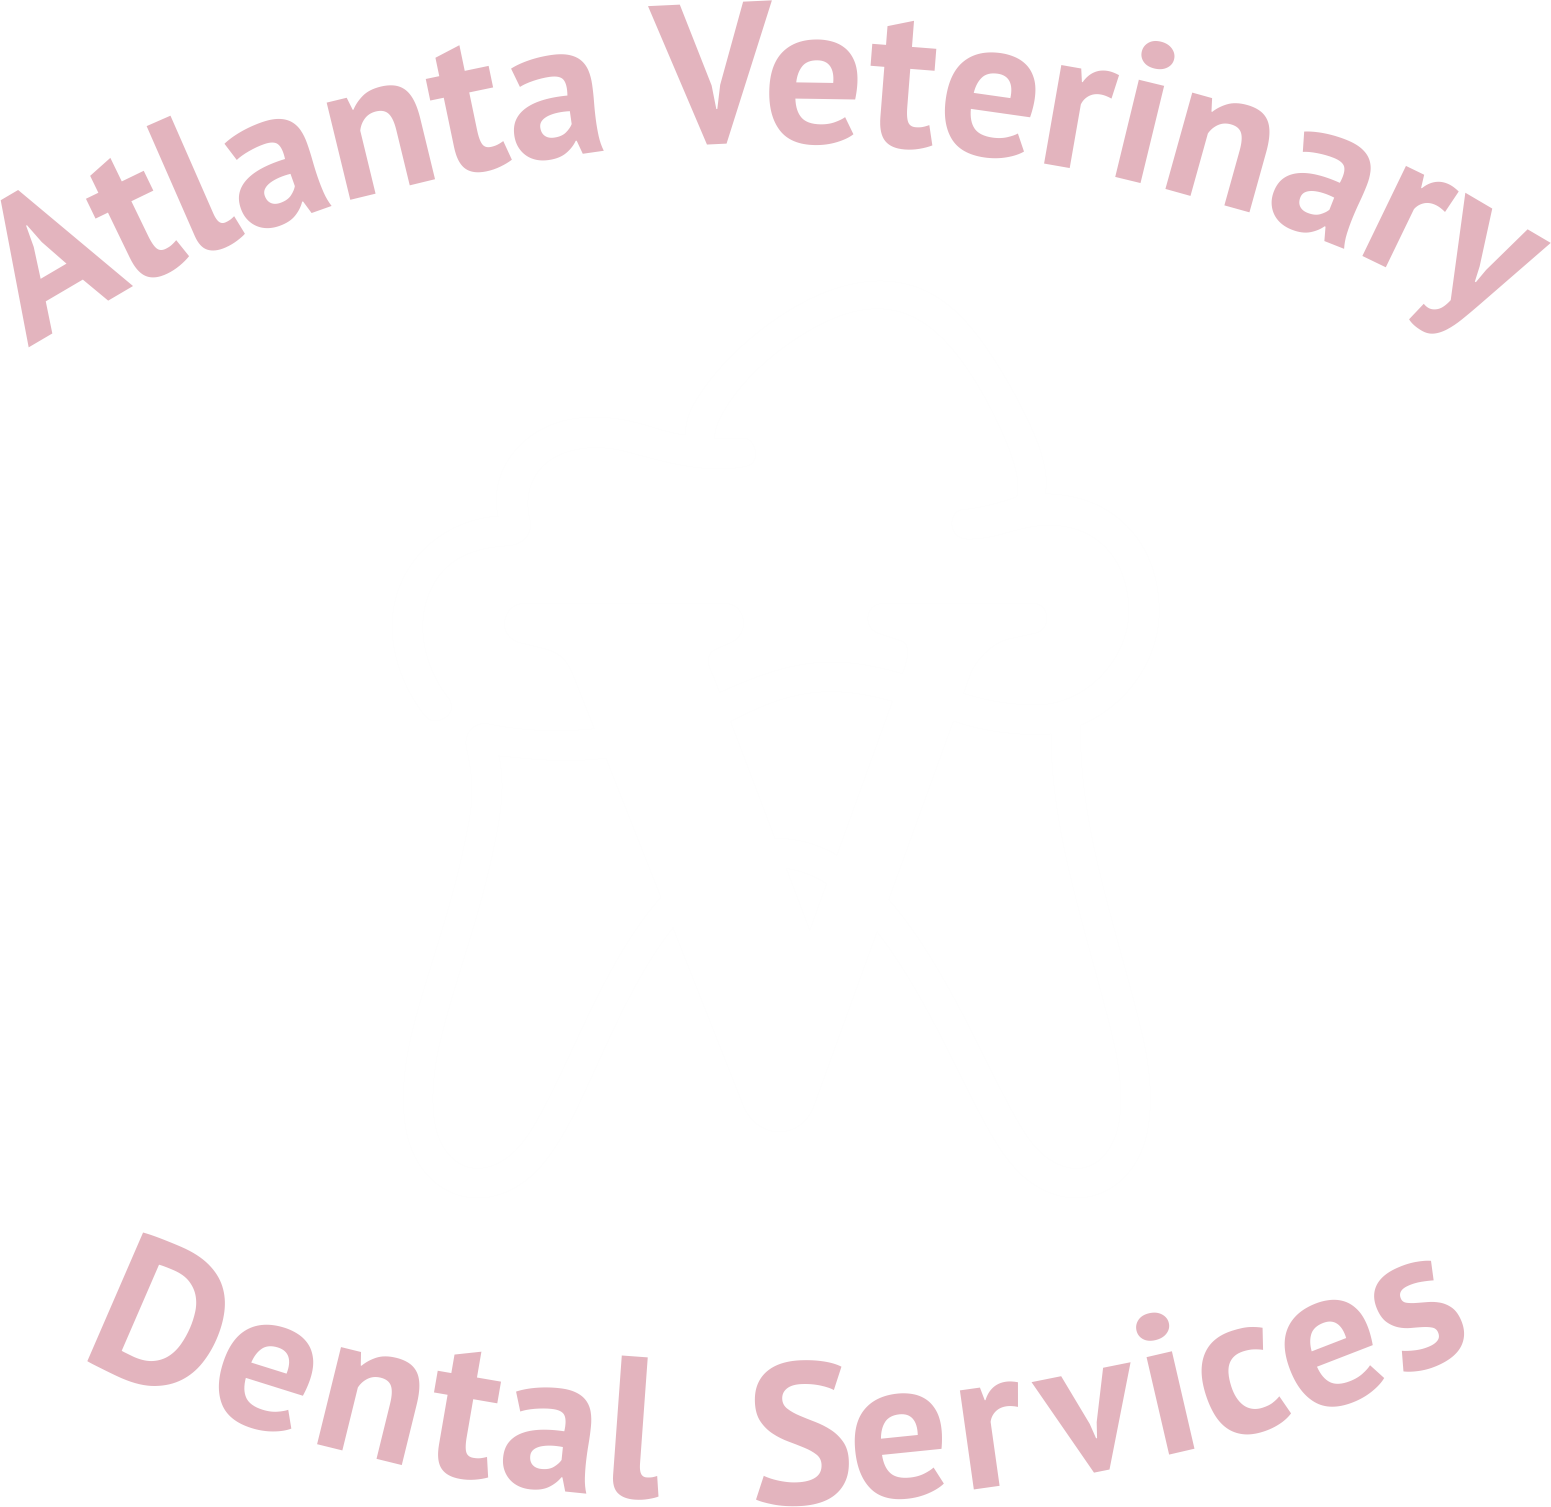 Atlanta Veterinary Dental Services